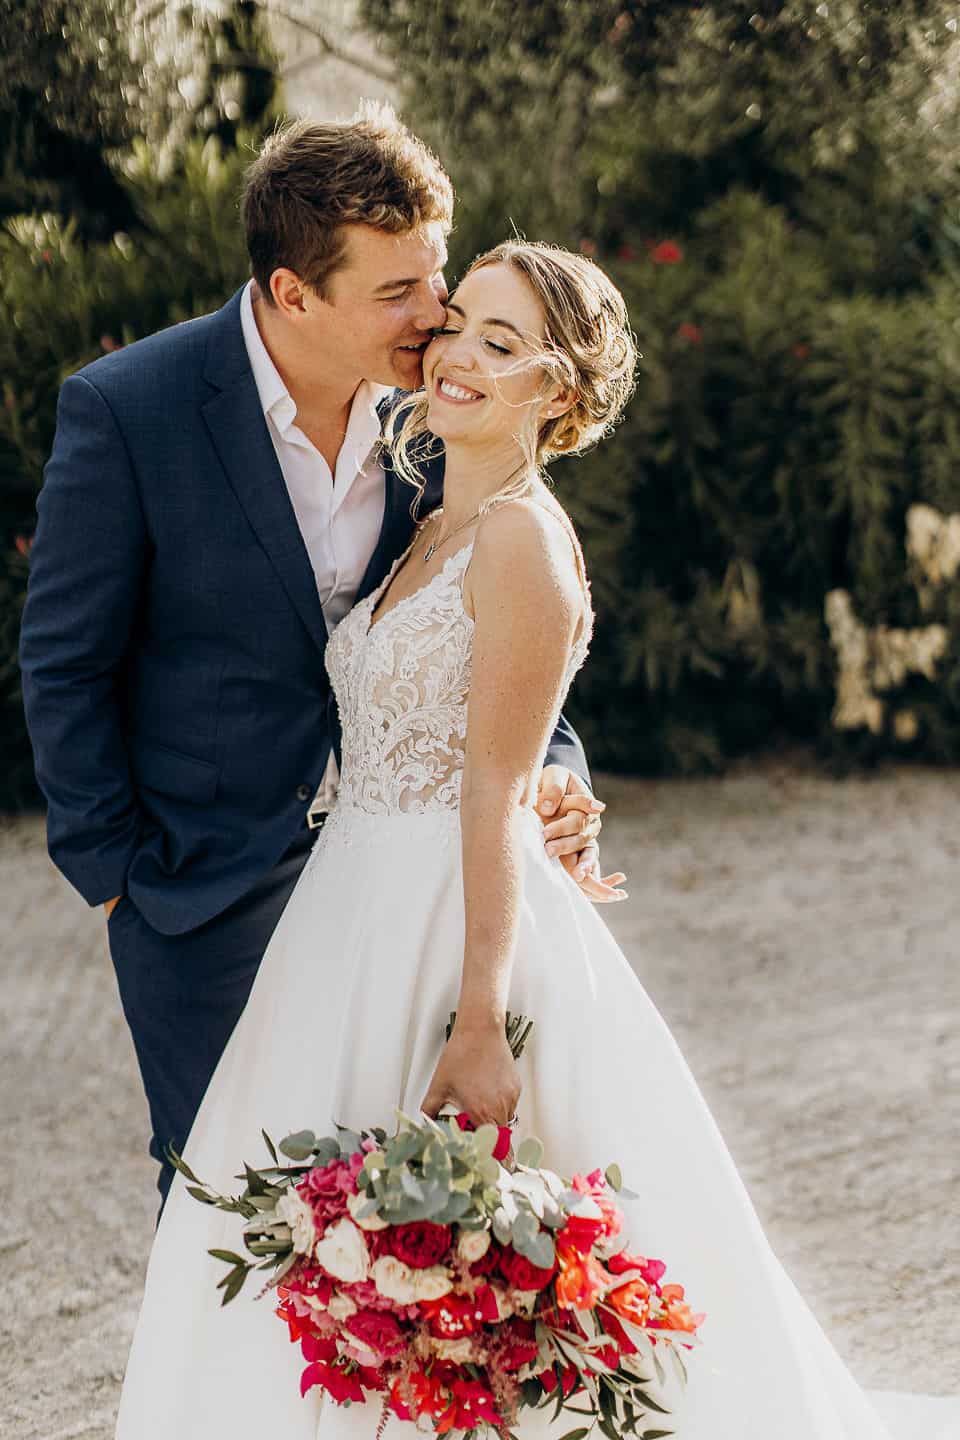 CHAPEL WEDDING TRADITIONAL ESTATE GAMOSCRETE WEDDING PLANNER IN CRETE GREECE 400